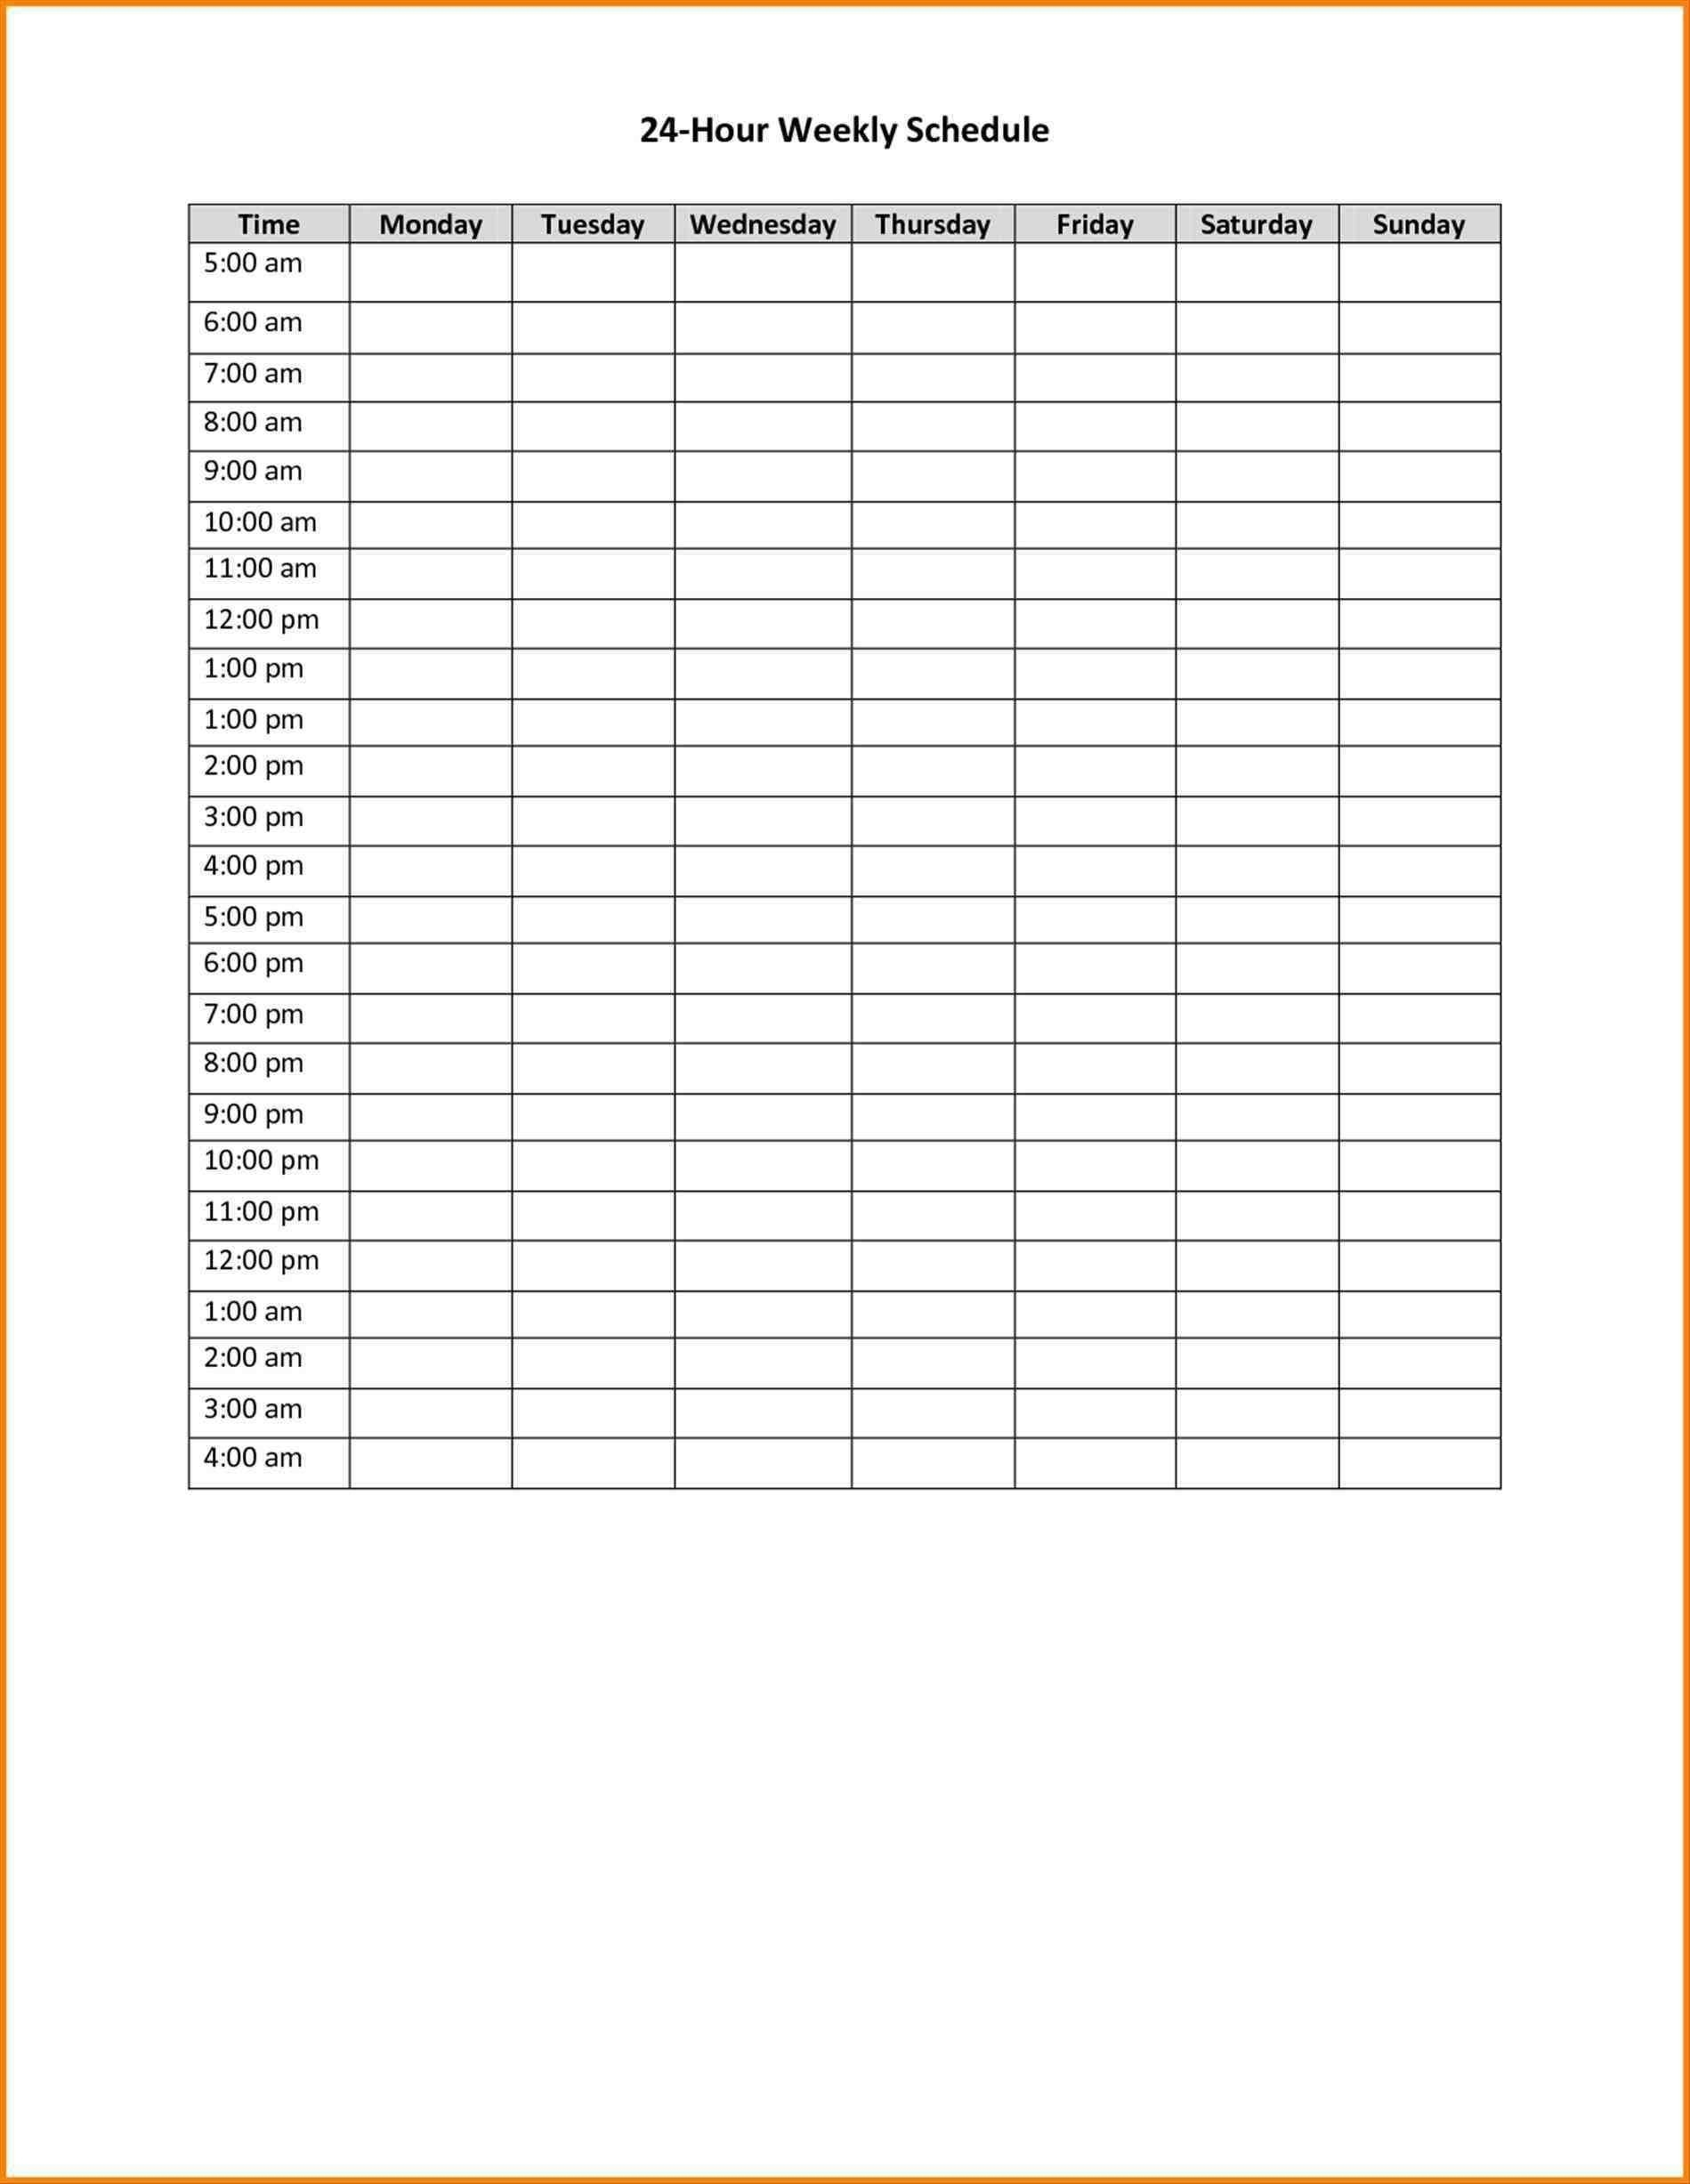 Blank Time Slot Week Schedules | Example Calendar Printable